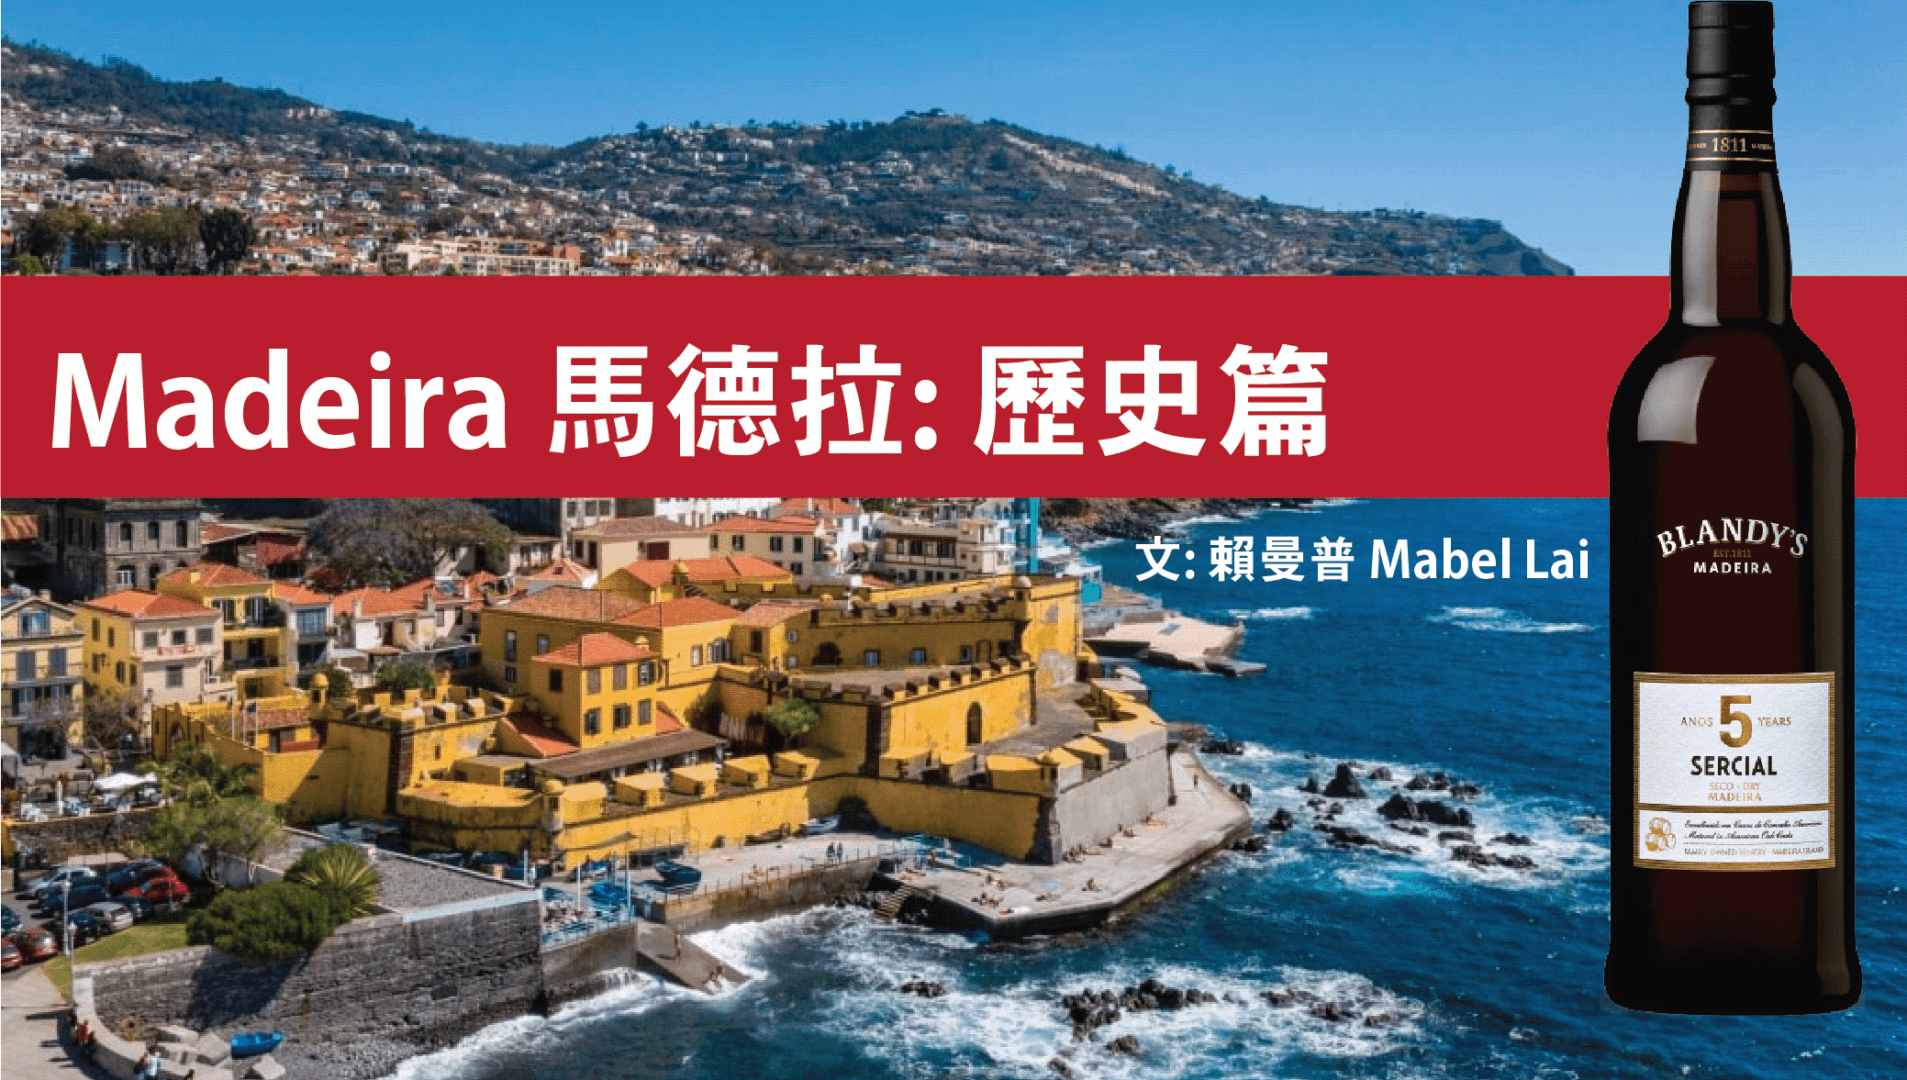 Madeira 馬德拉: 歷史篇 - WineNow HK